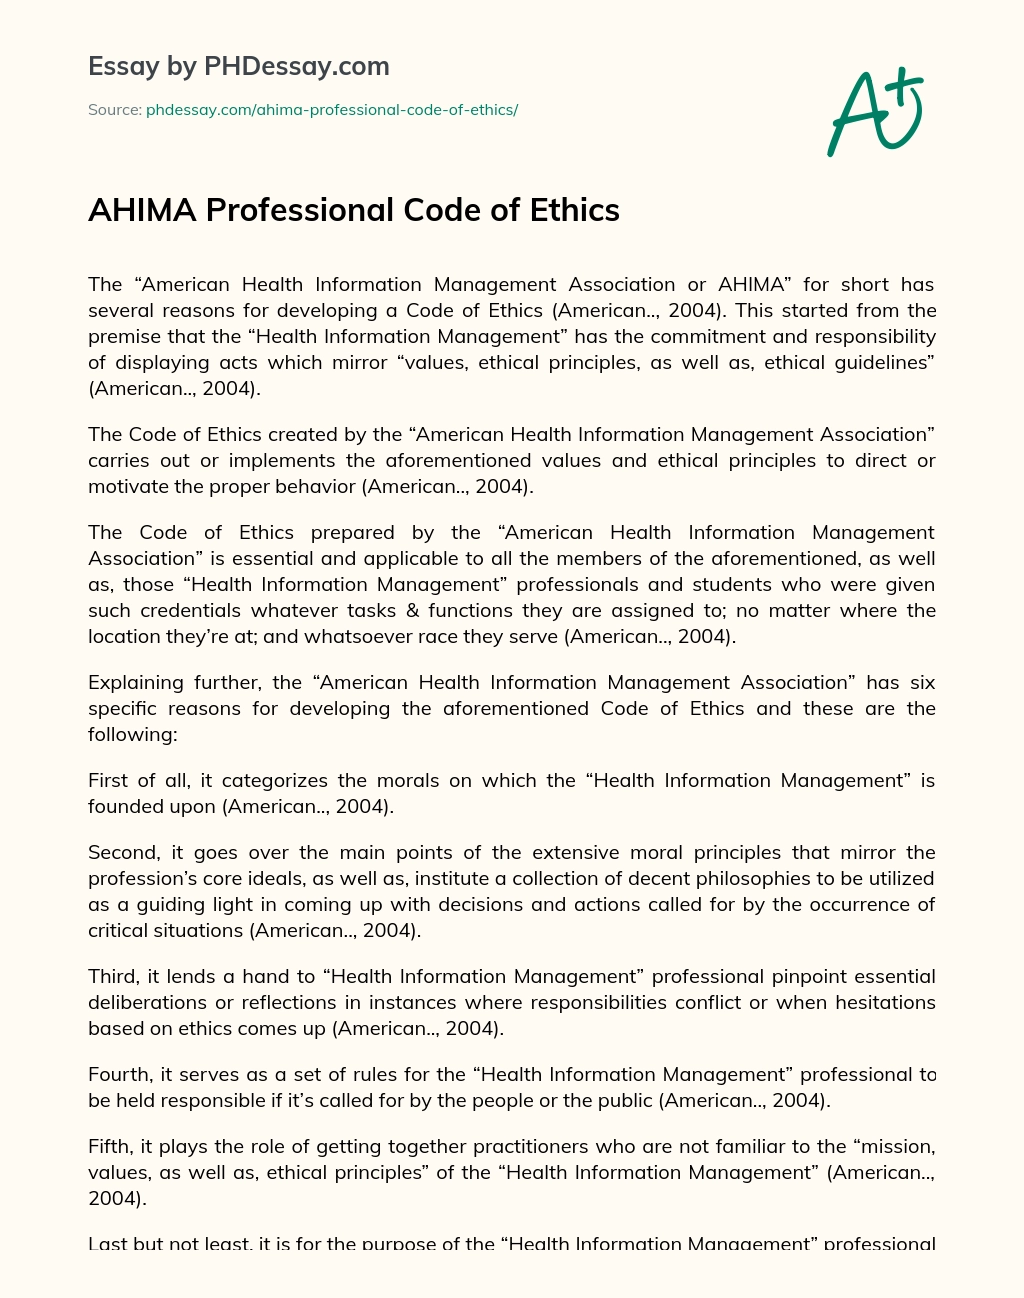 AHIMA Professional Code of Ethics essay